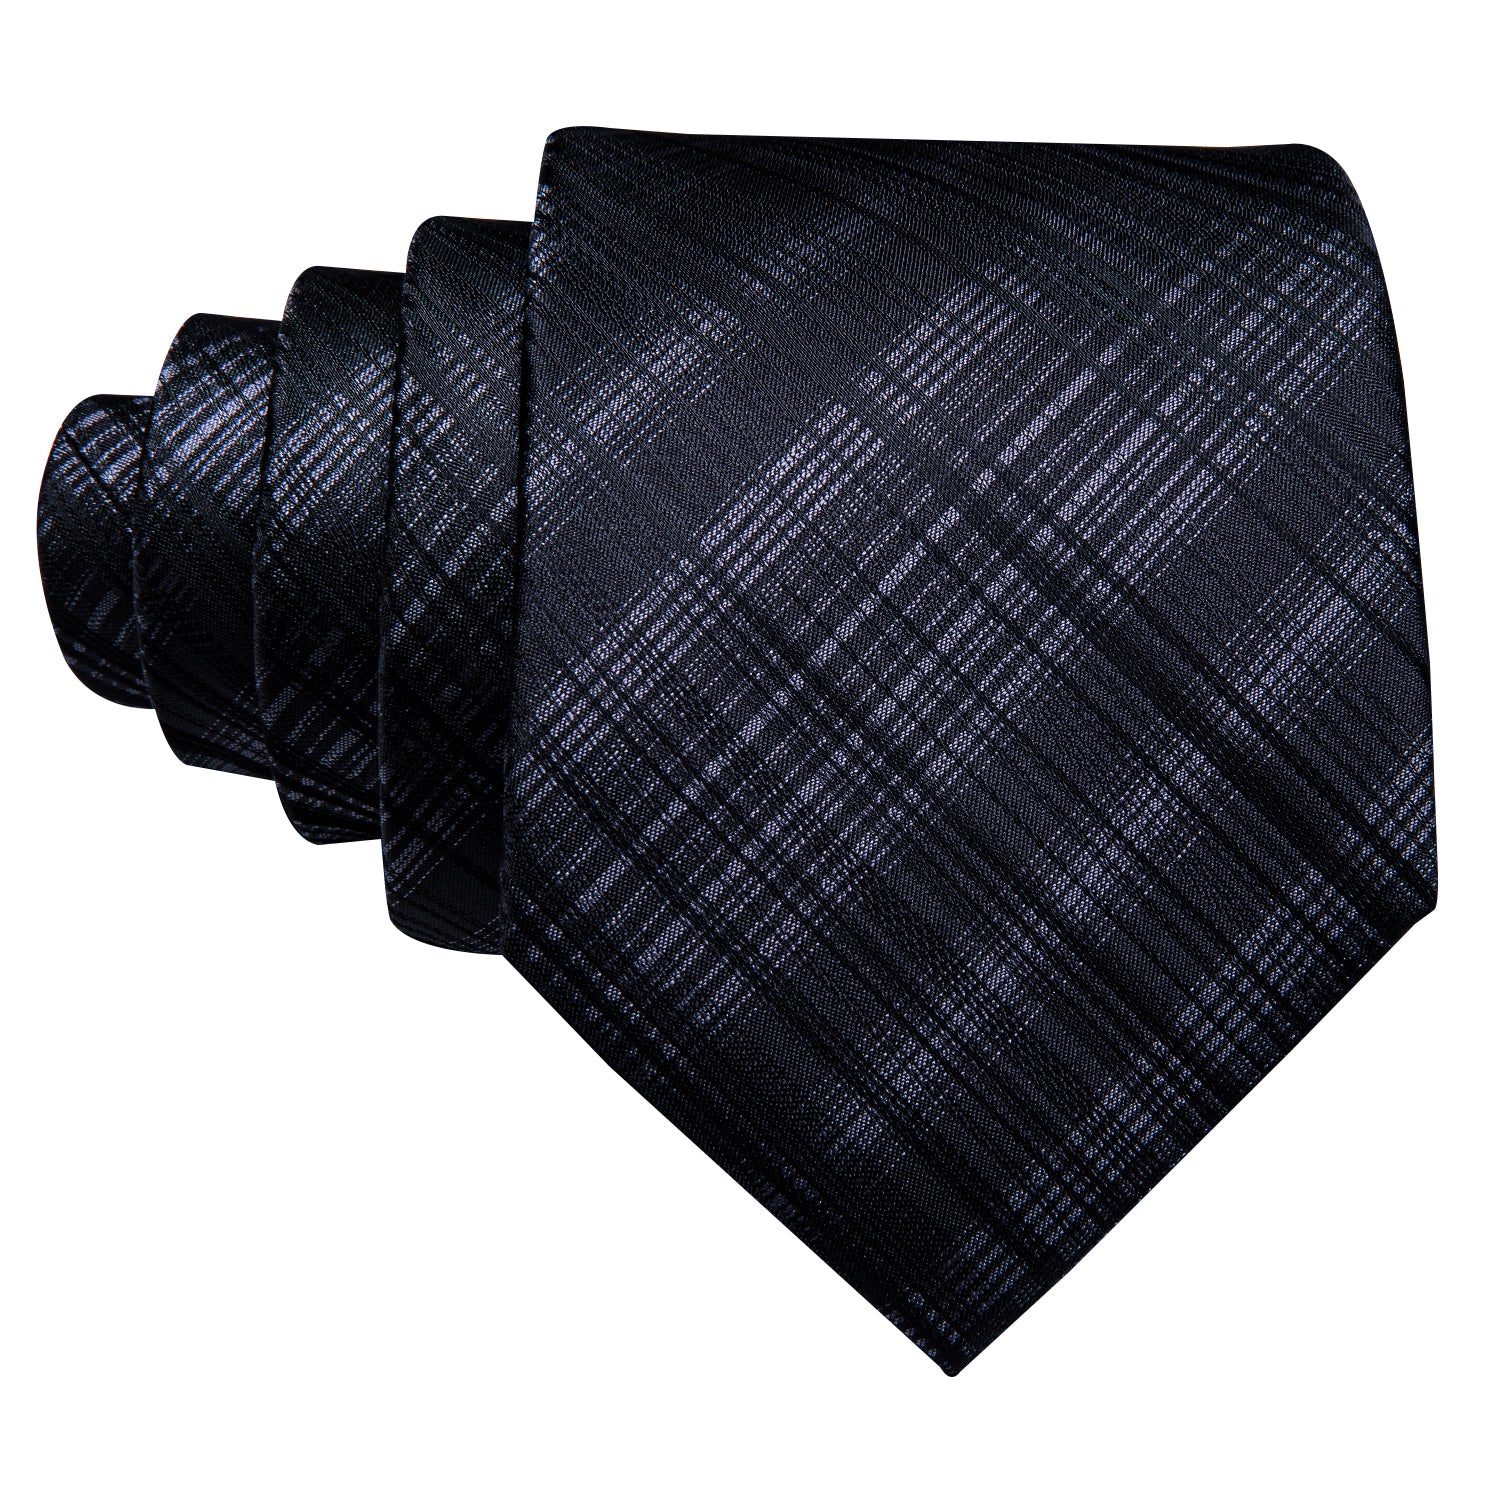 High Gloss Black and Gray Stripe Tie Pocket Square Cufflinks Set